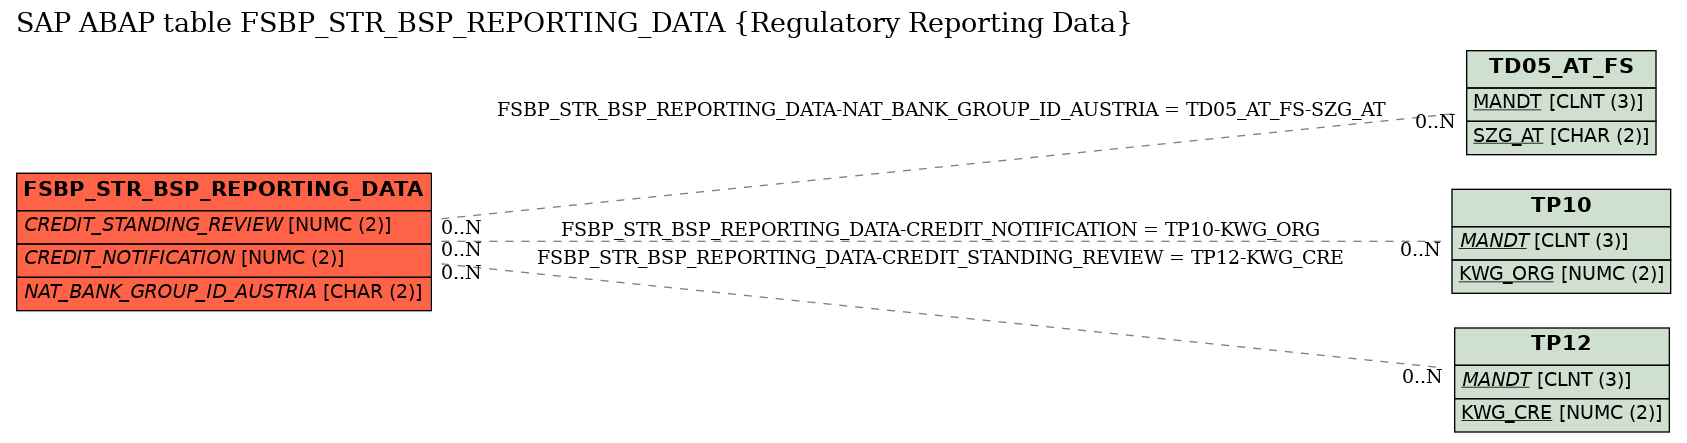 E-R Diagram for table FSBP_STR_BSP_REPORTING_DATA (Regulatory Reporting Data)